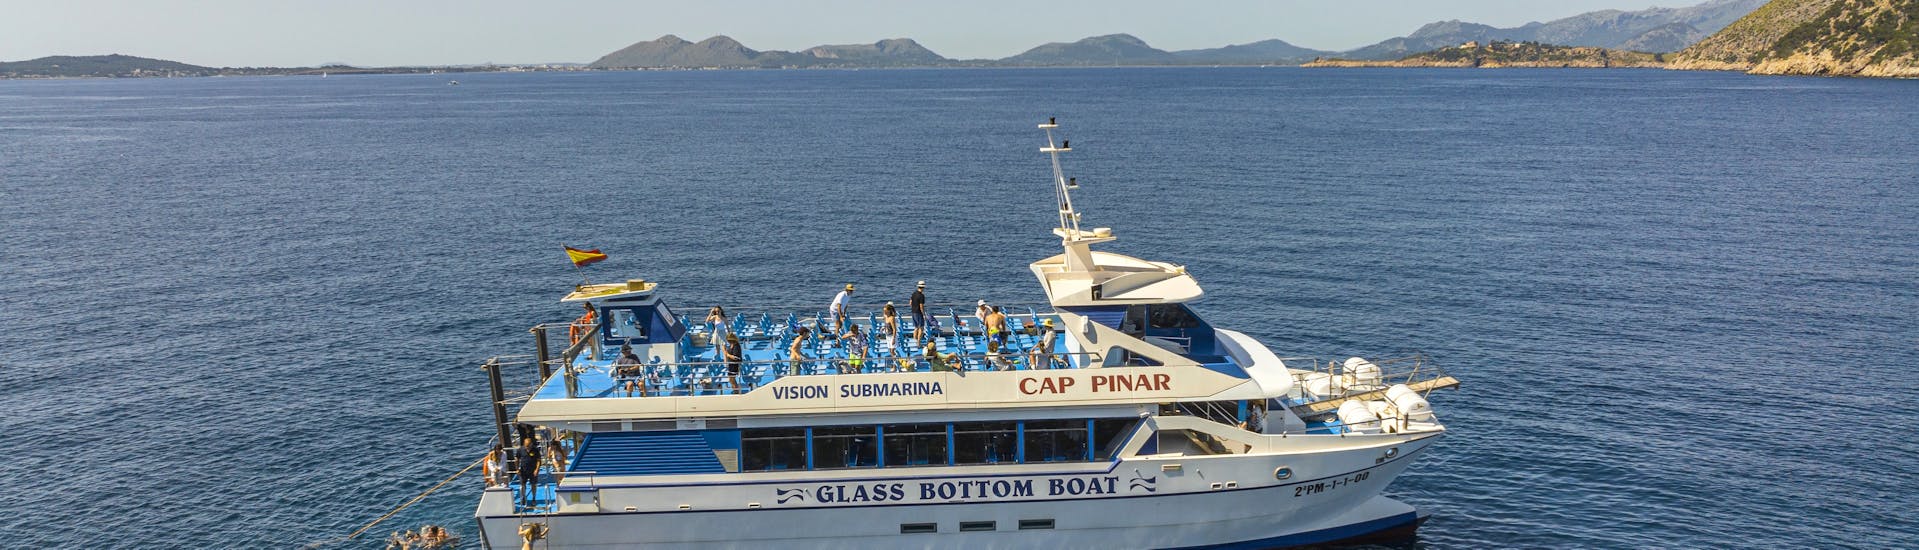 Des personnes profitent de la Balade en catamaran autour de la baie de Pollença avec Baignade avec Lanchas La Gaviota Pollença.